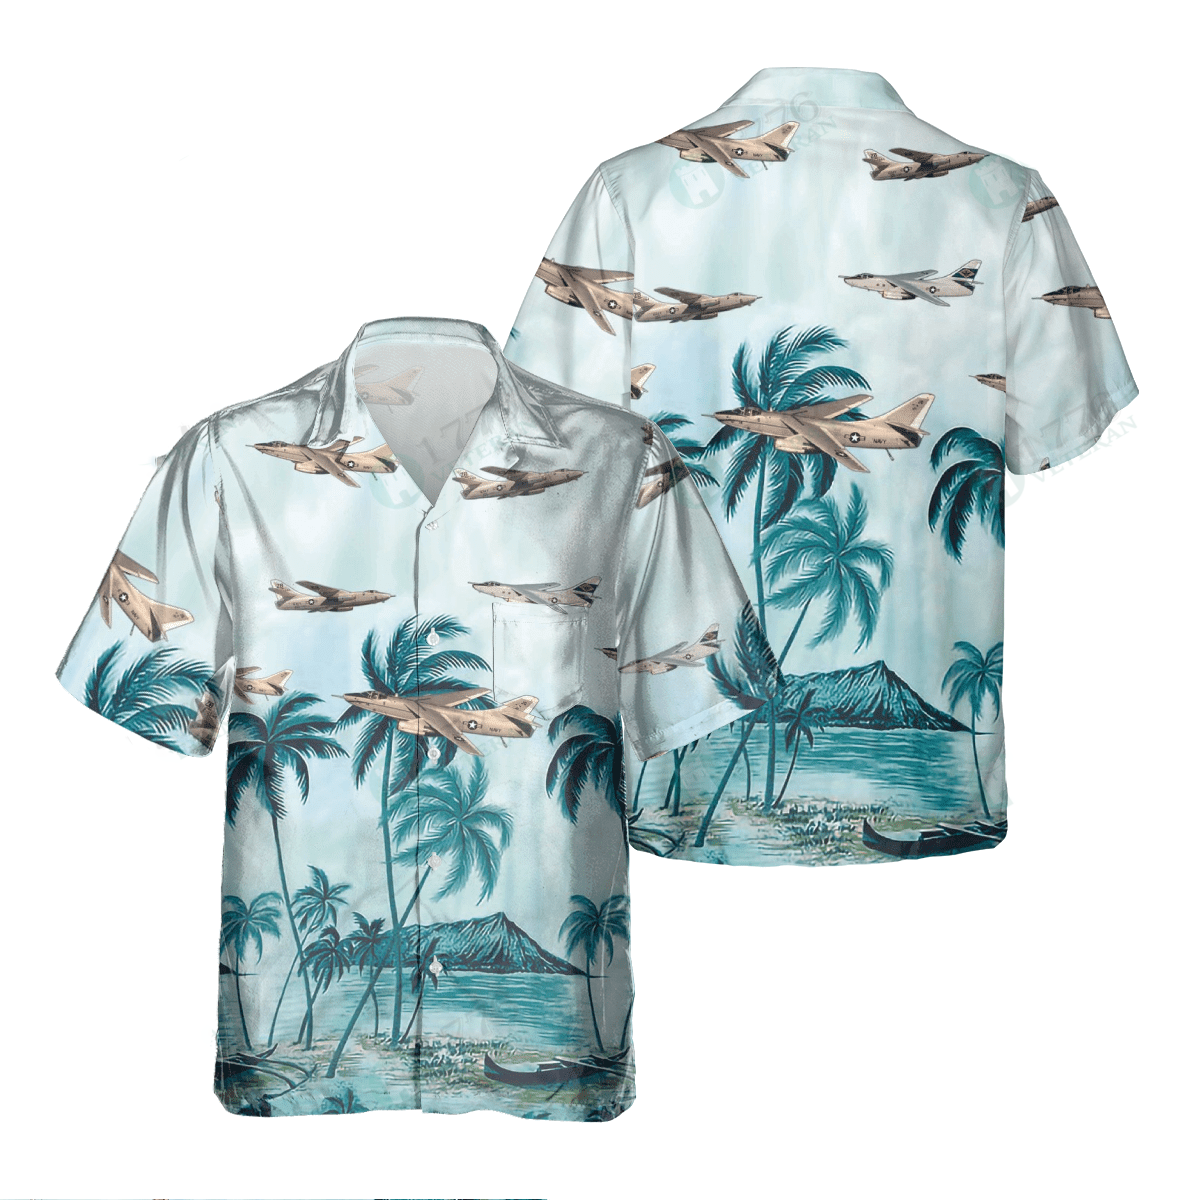 A-3 Skywarrior Pocket Hawaiian Shirt C1/ Hawaiian Shirt for Men Dad Veteran/ Patriot Day